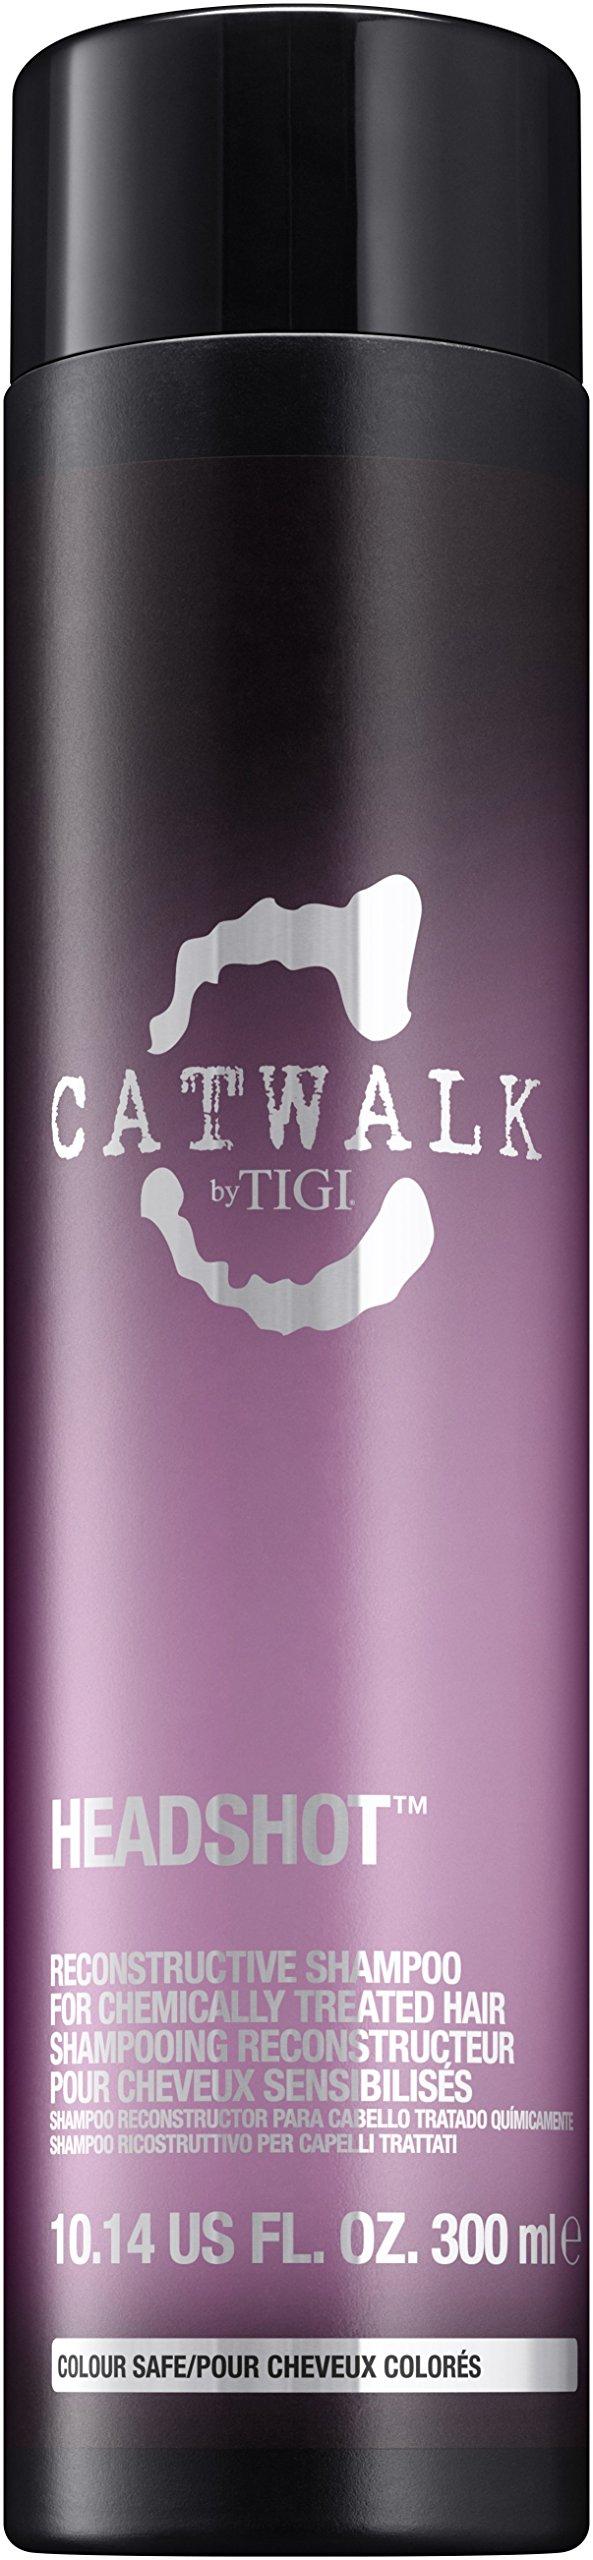 TIGI Catwalk Headshot Reconstructive Shampoo 10.14 fl Oz